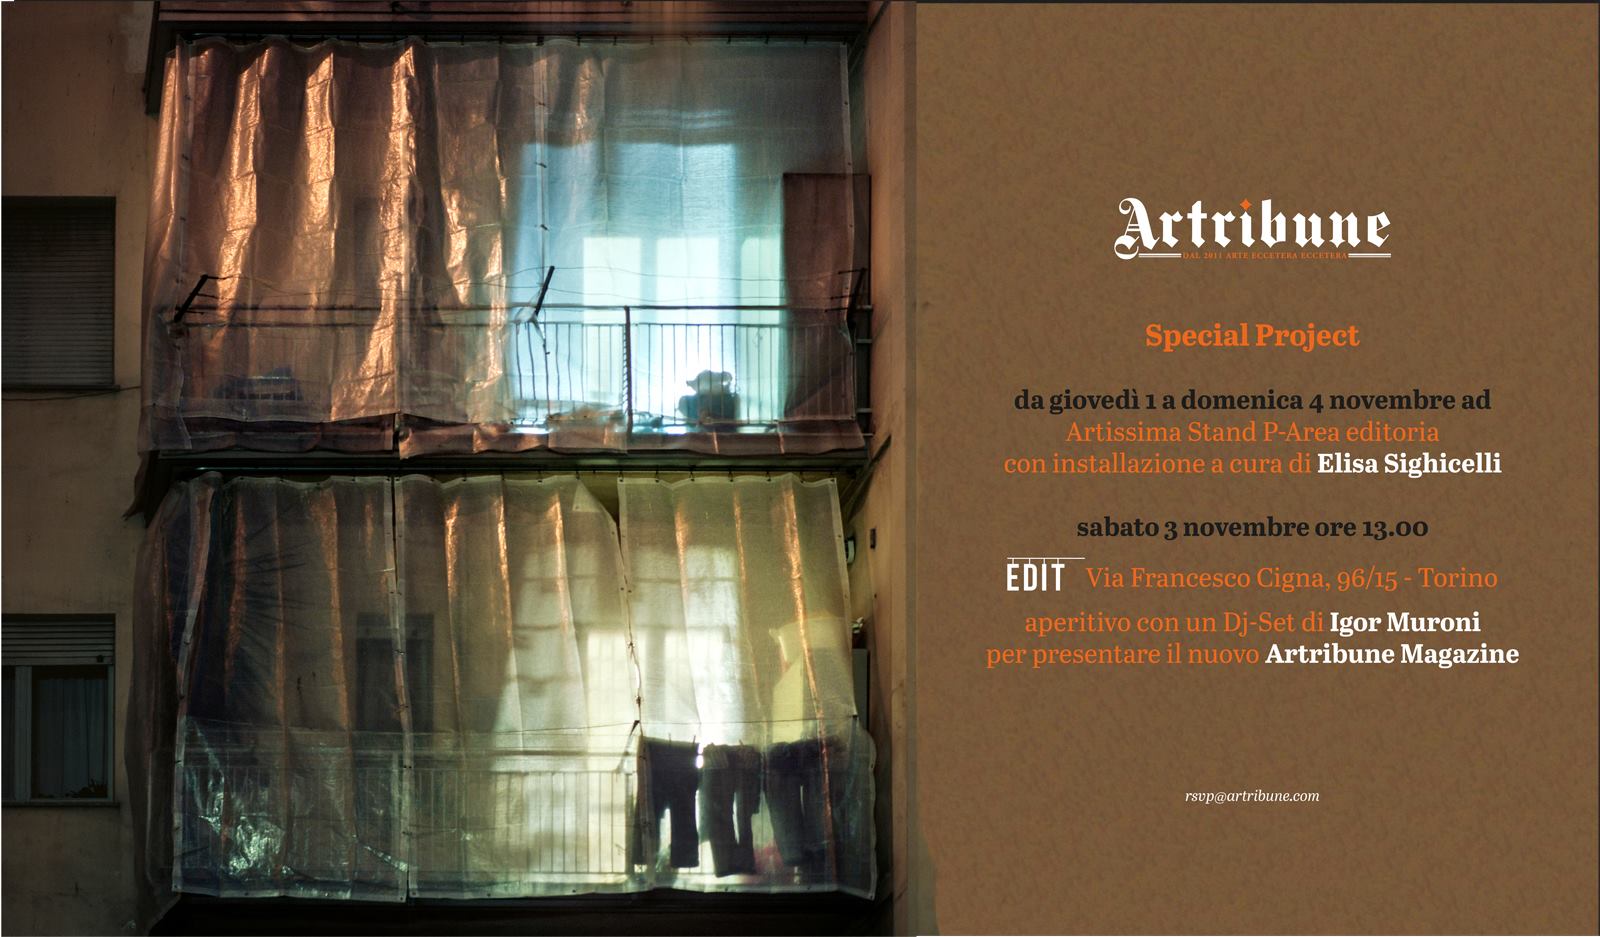 Artribune – Special Project